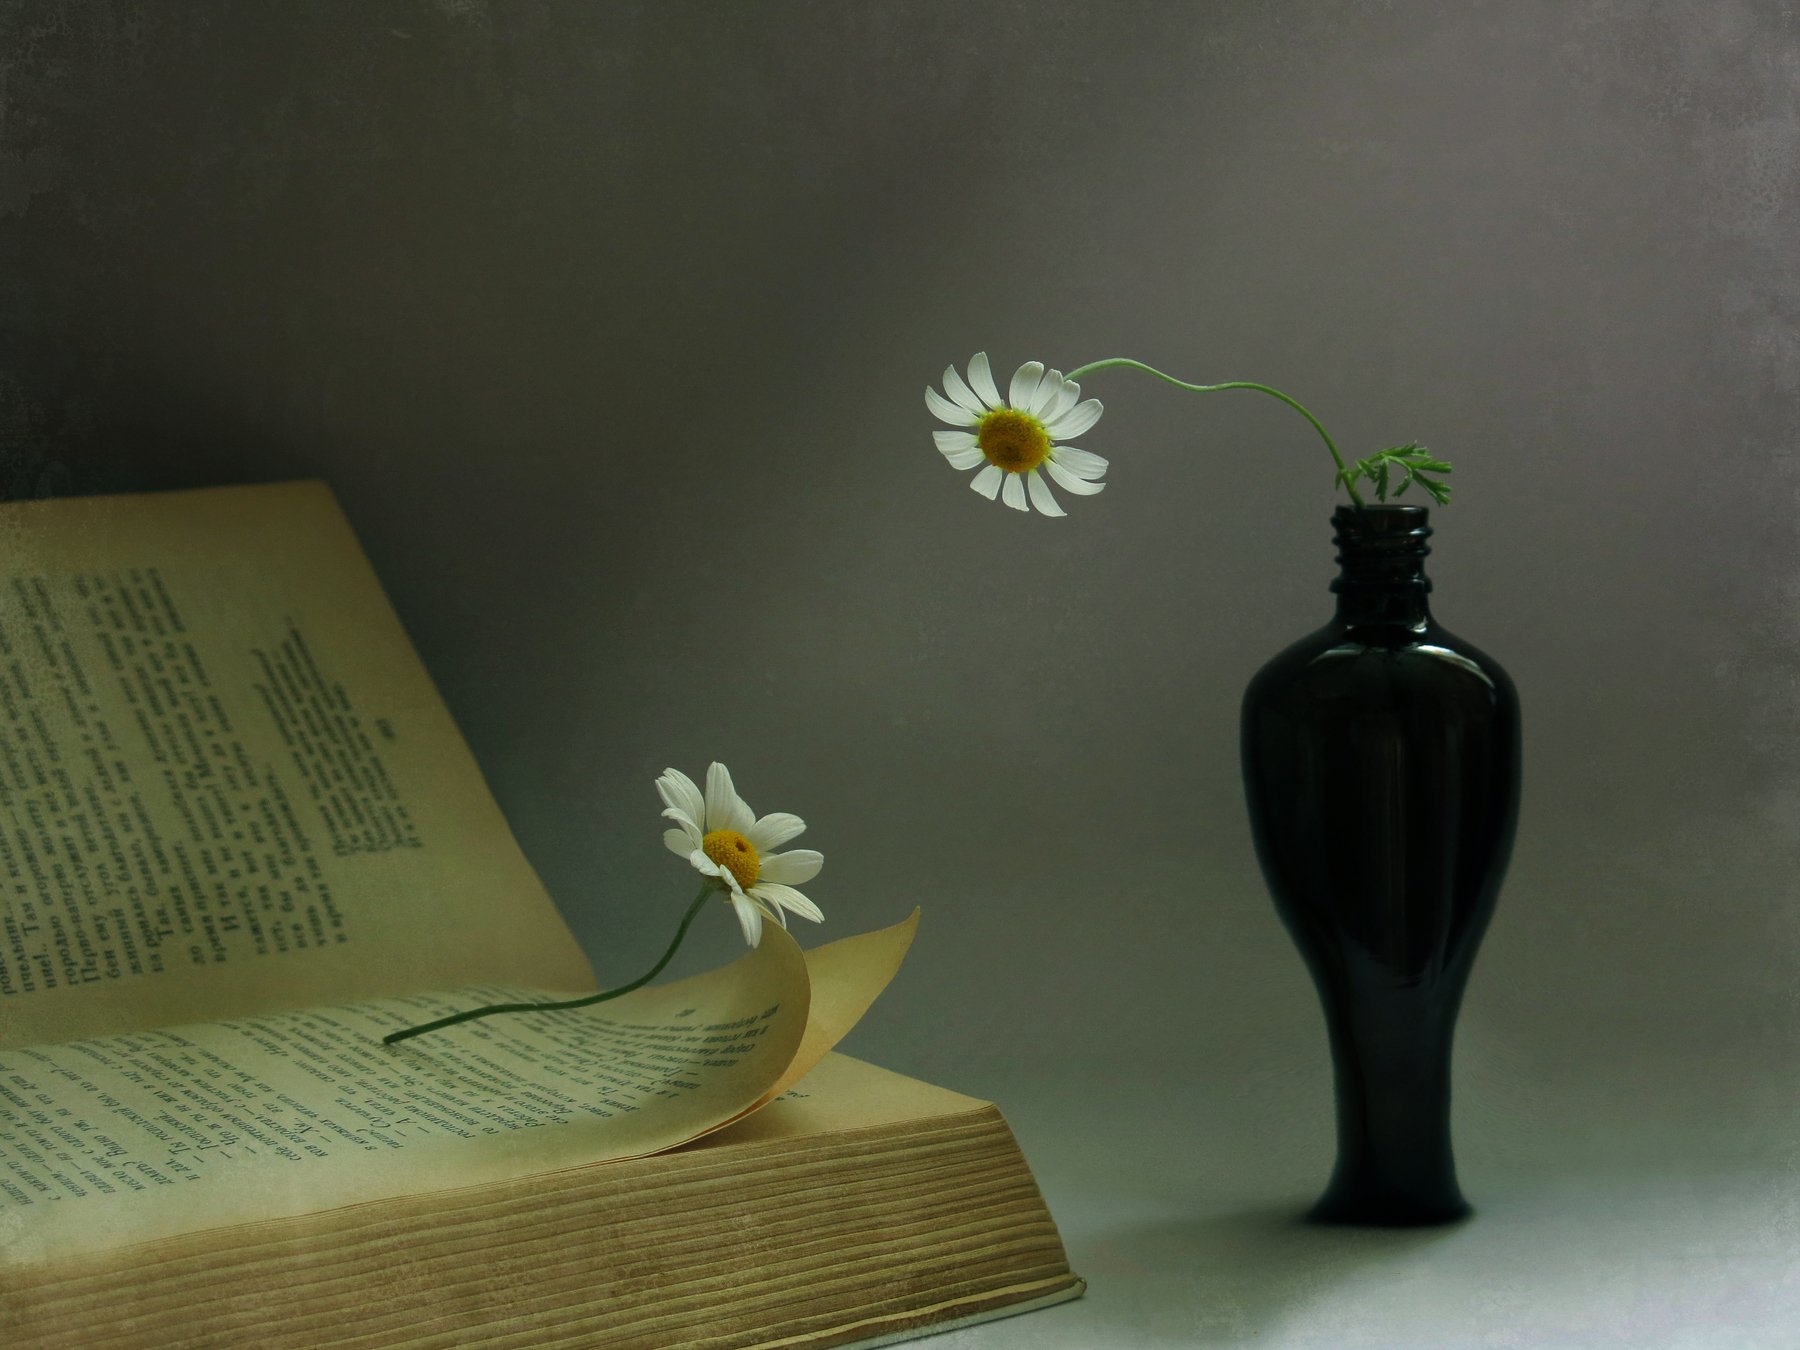 ромашка, цветок, книга, слова, беседа, ваза, двое, страницы, текст, буквы, библиотека, Елена